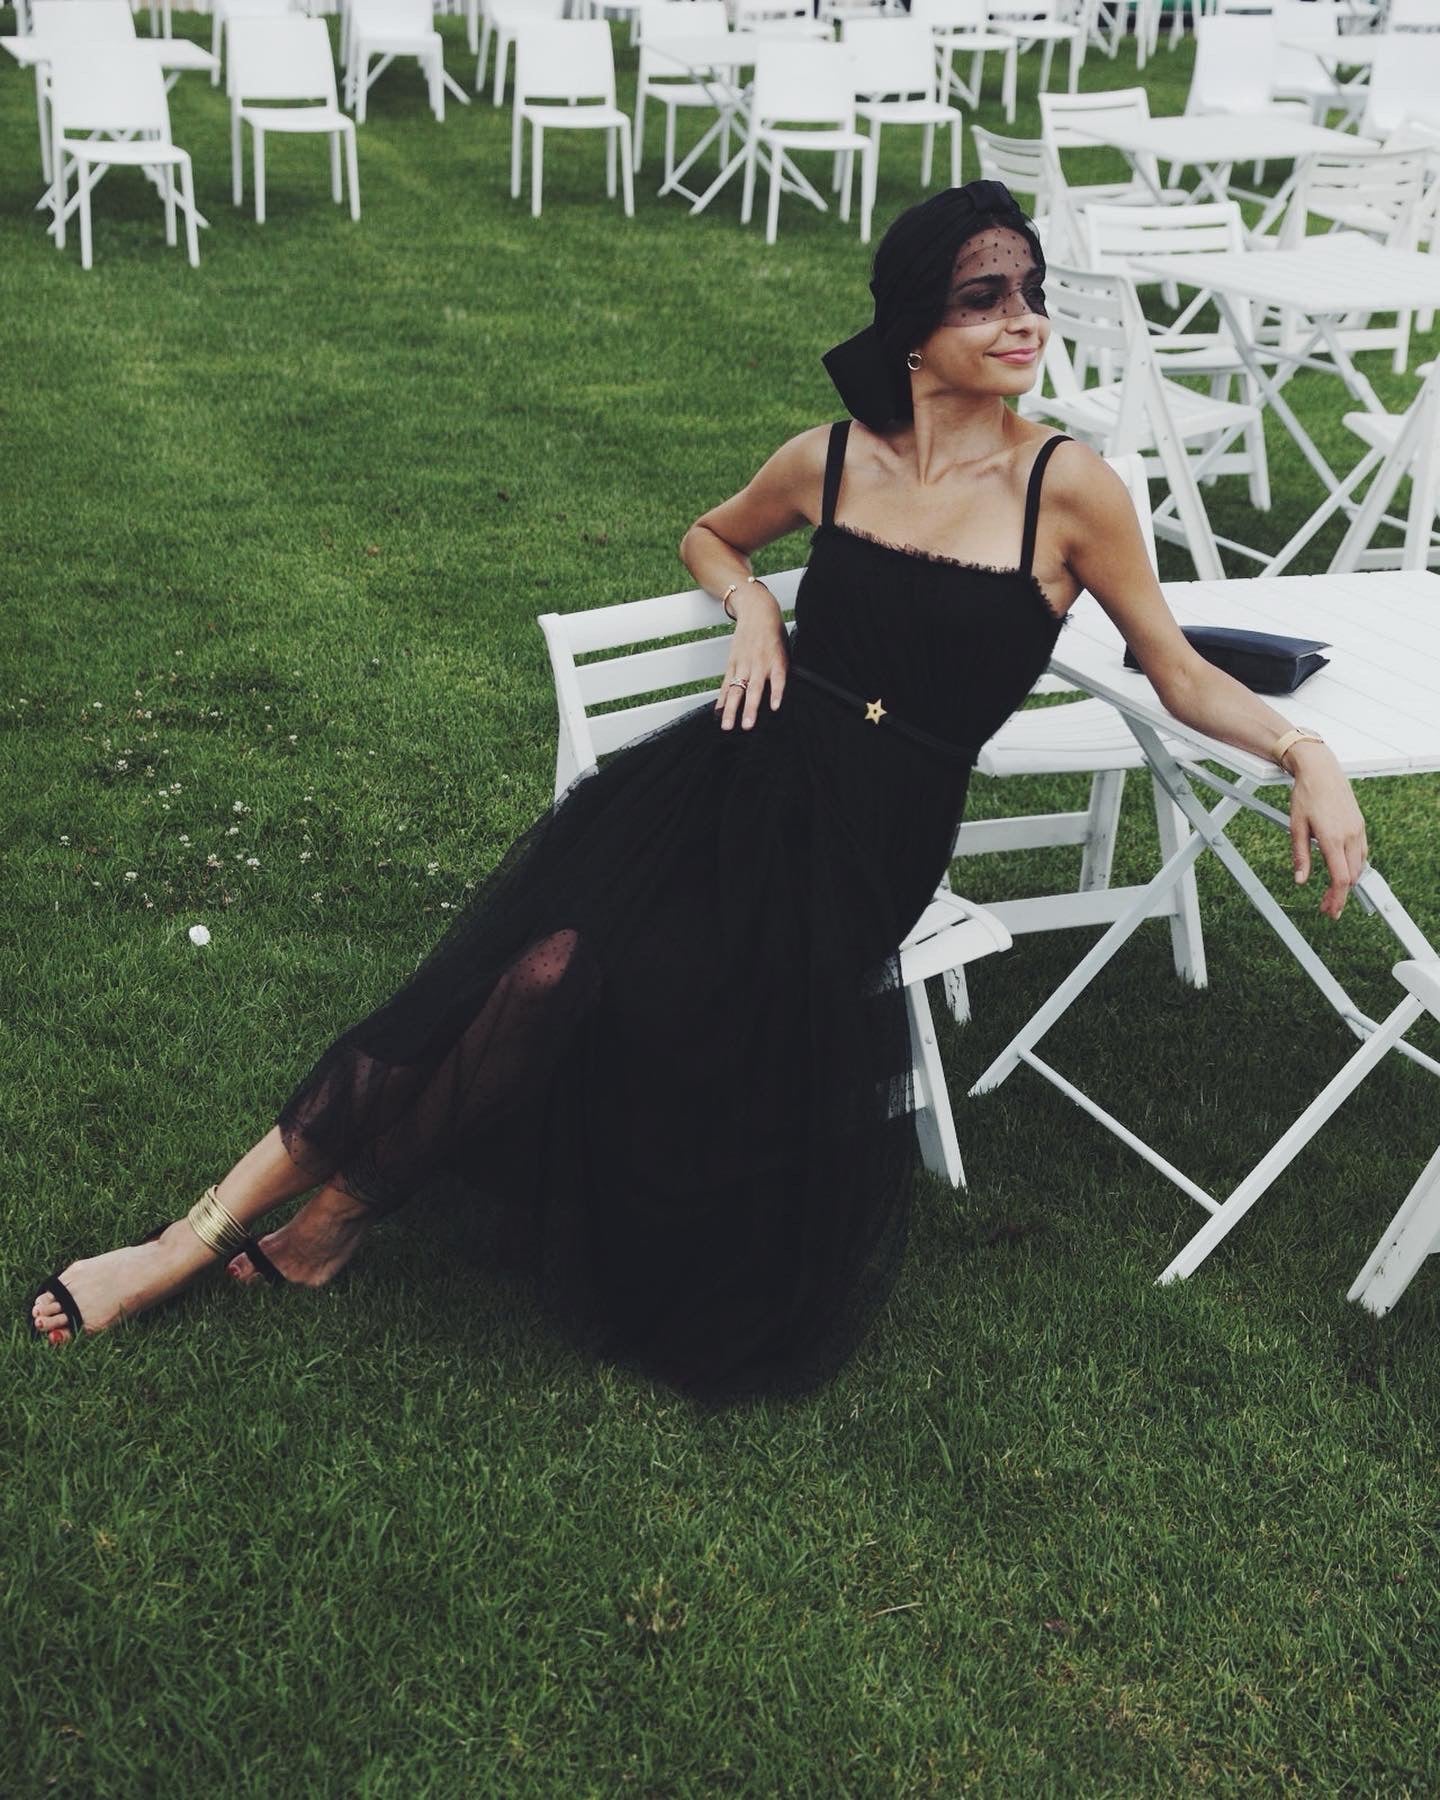 Chanel Ayan's Black Strapless Polka Dot Dress